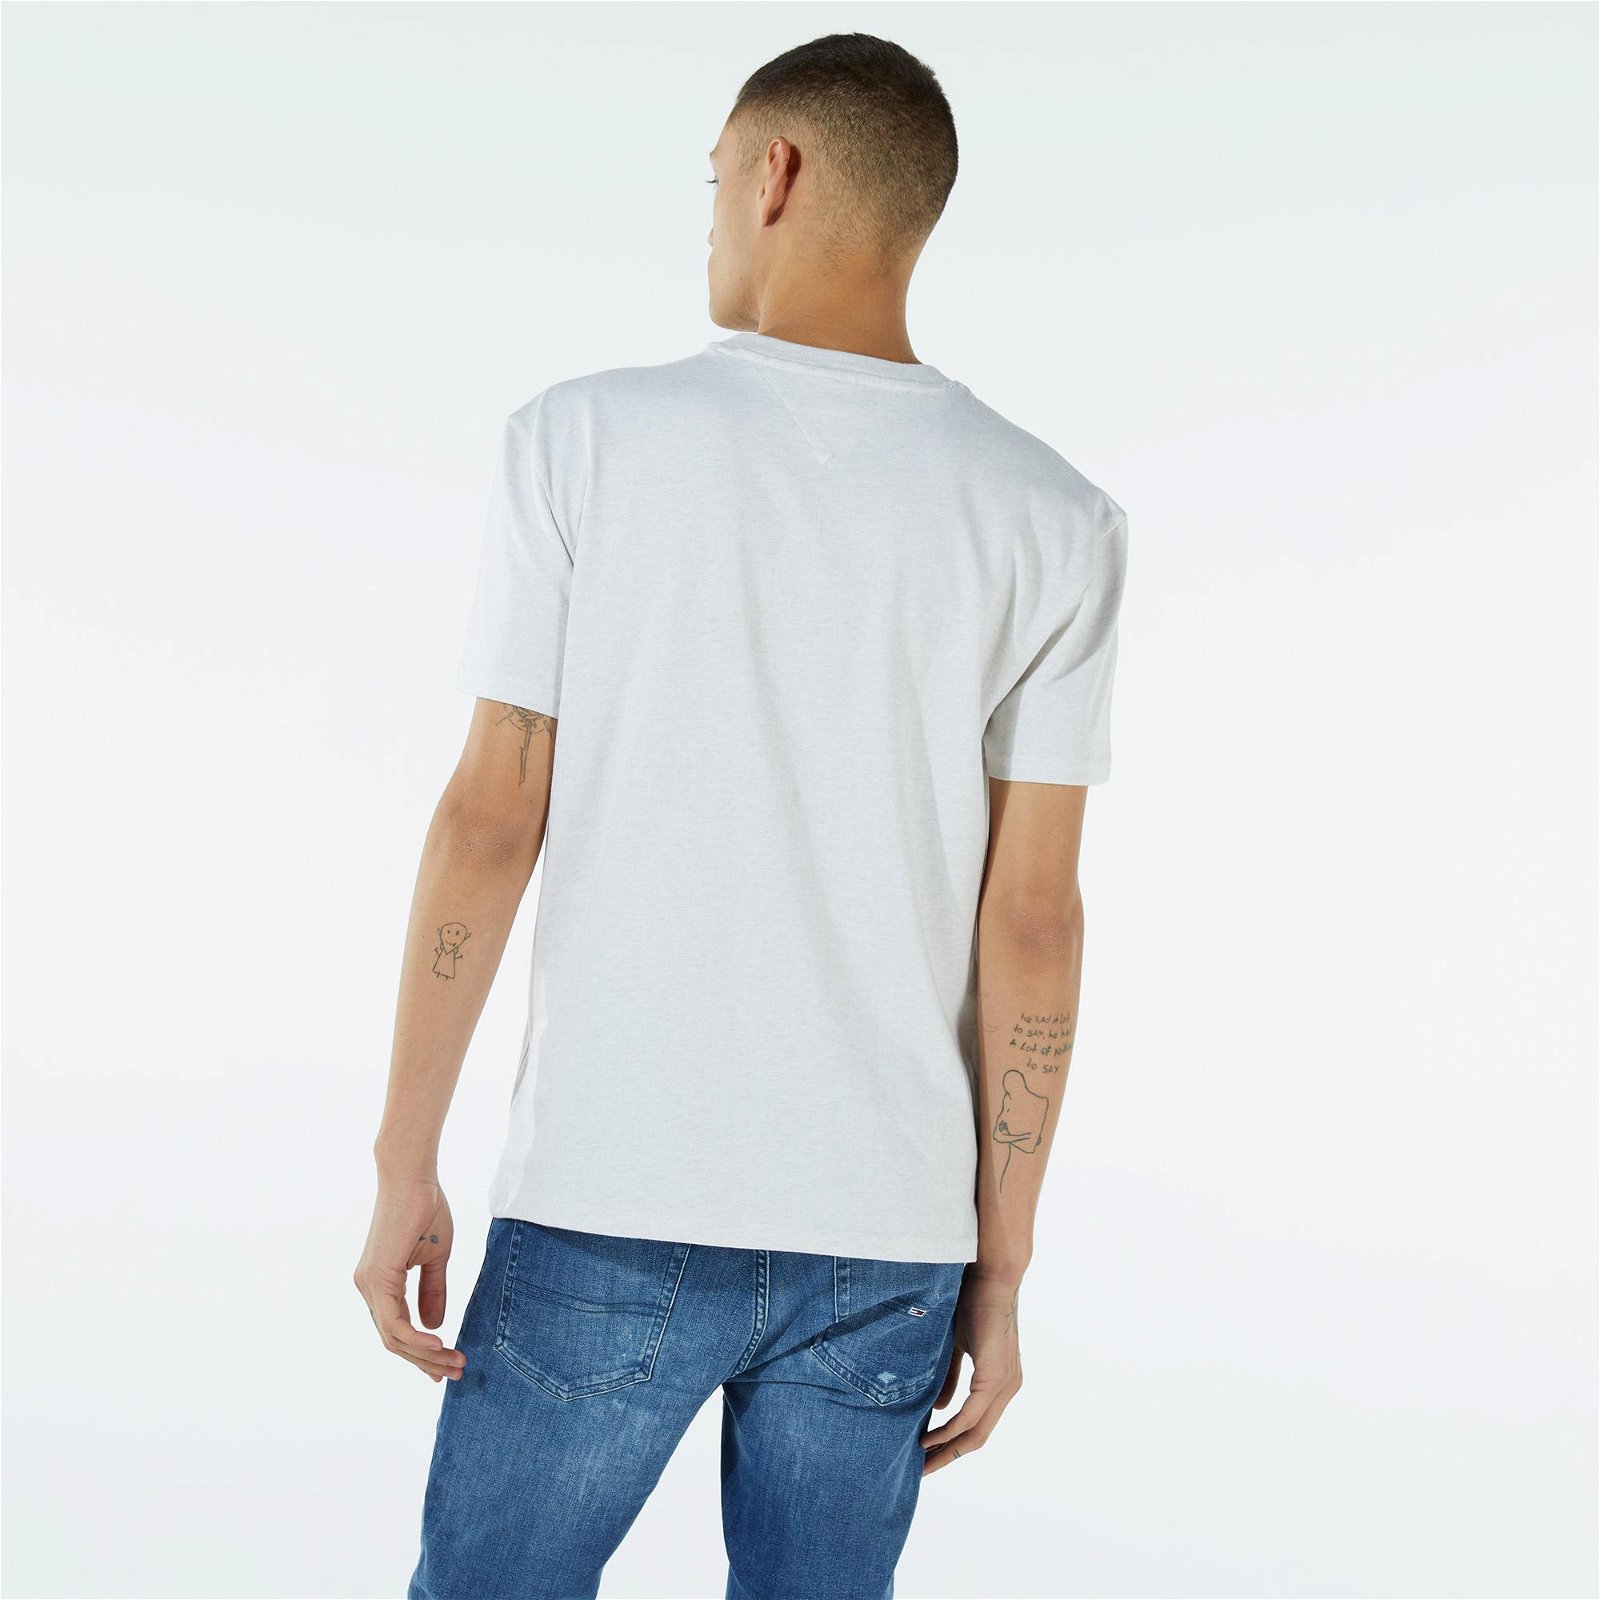 Tommy Jeans Linear Logo Erkek Beyaz T-Shirt